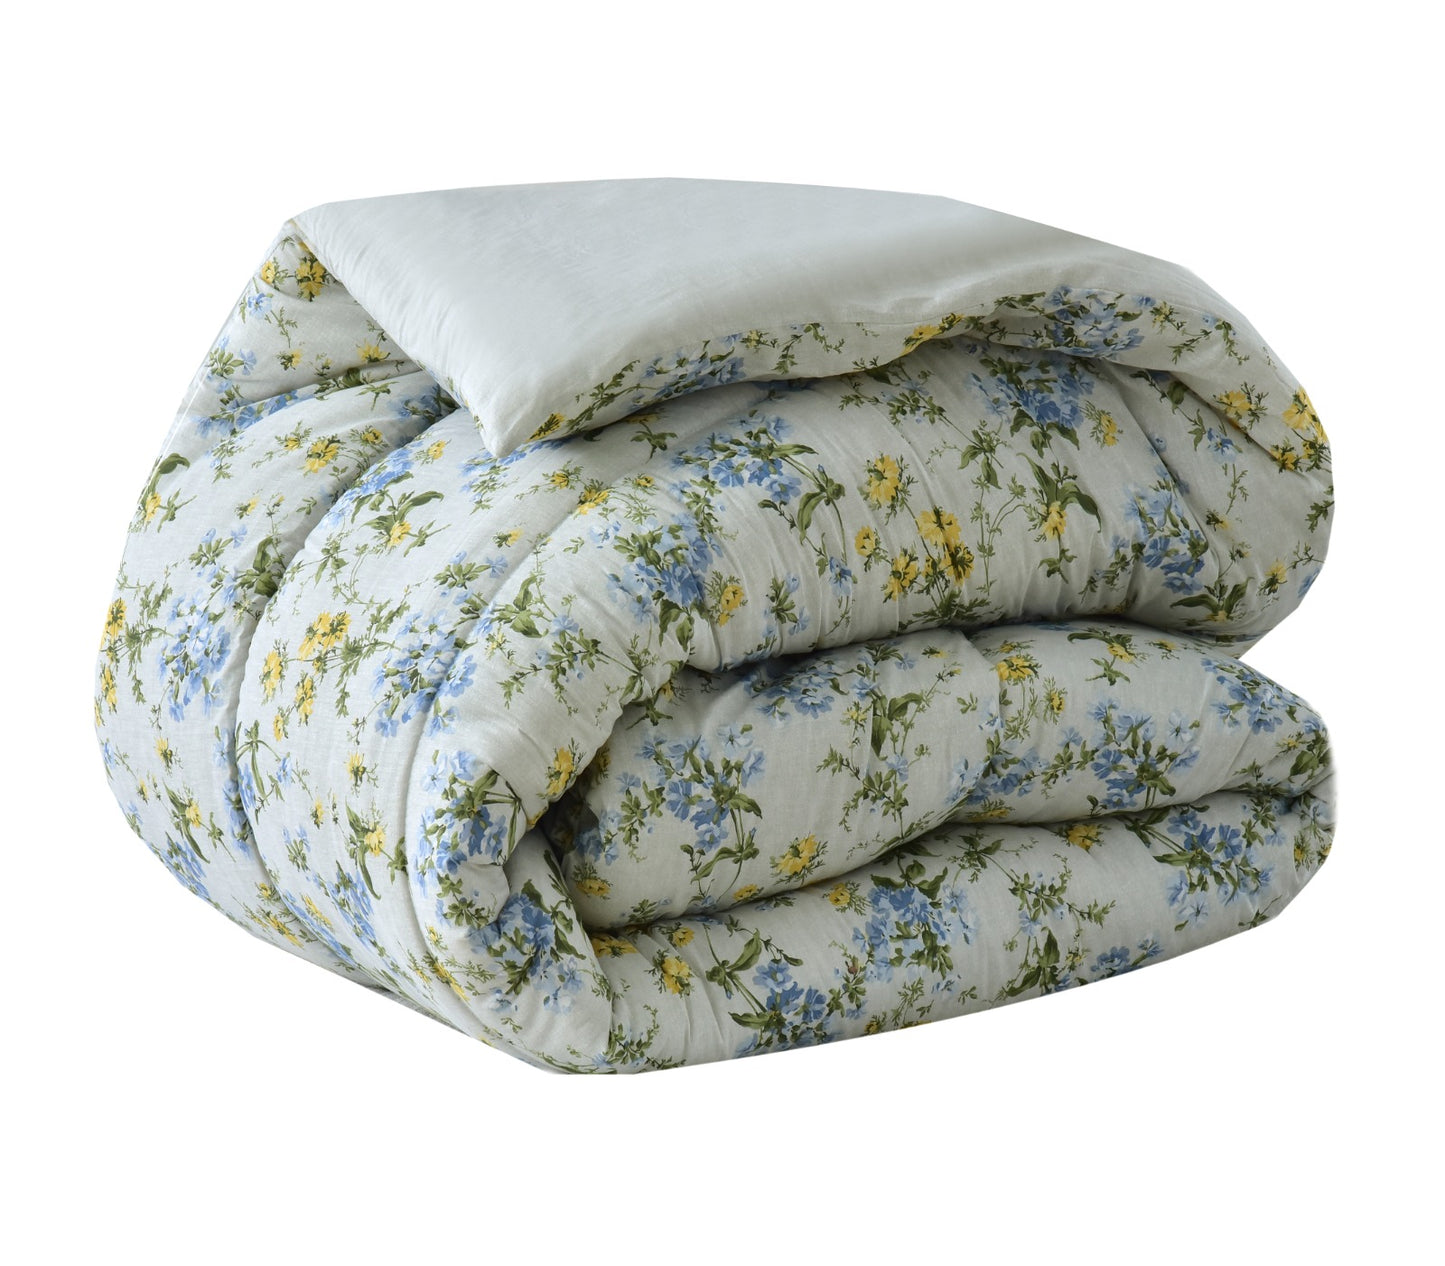 8 PCs Winter Comforter Set-Ashley Apricot